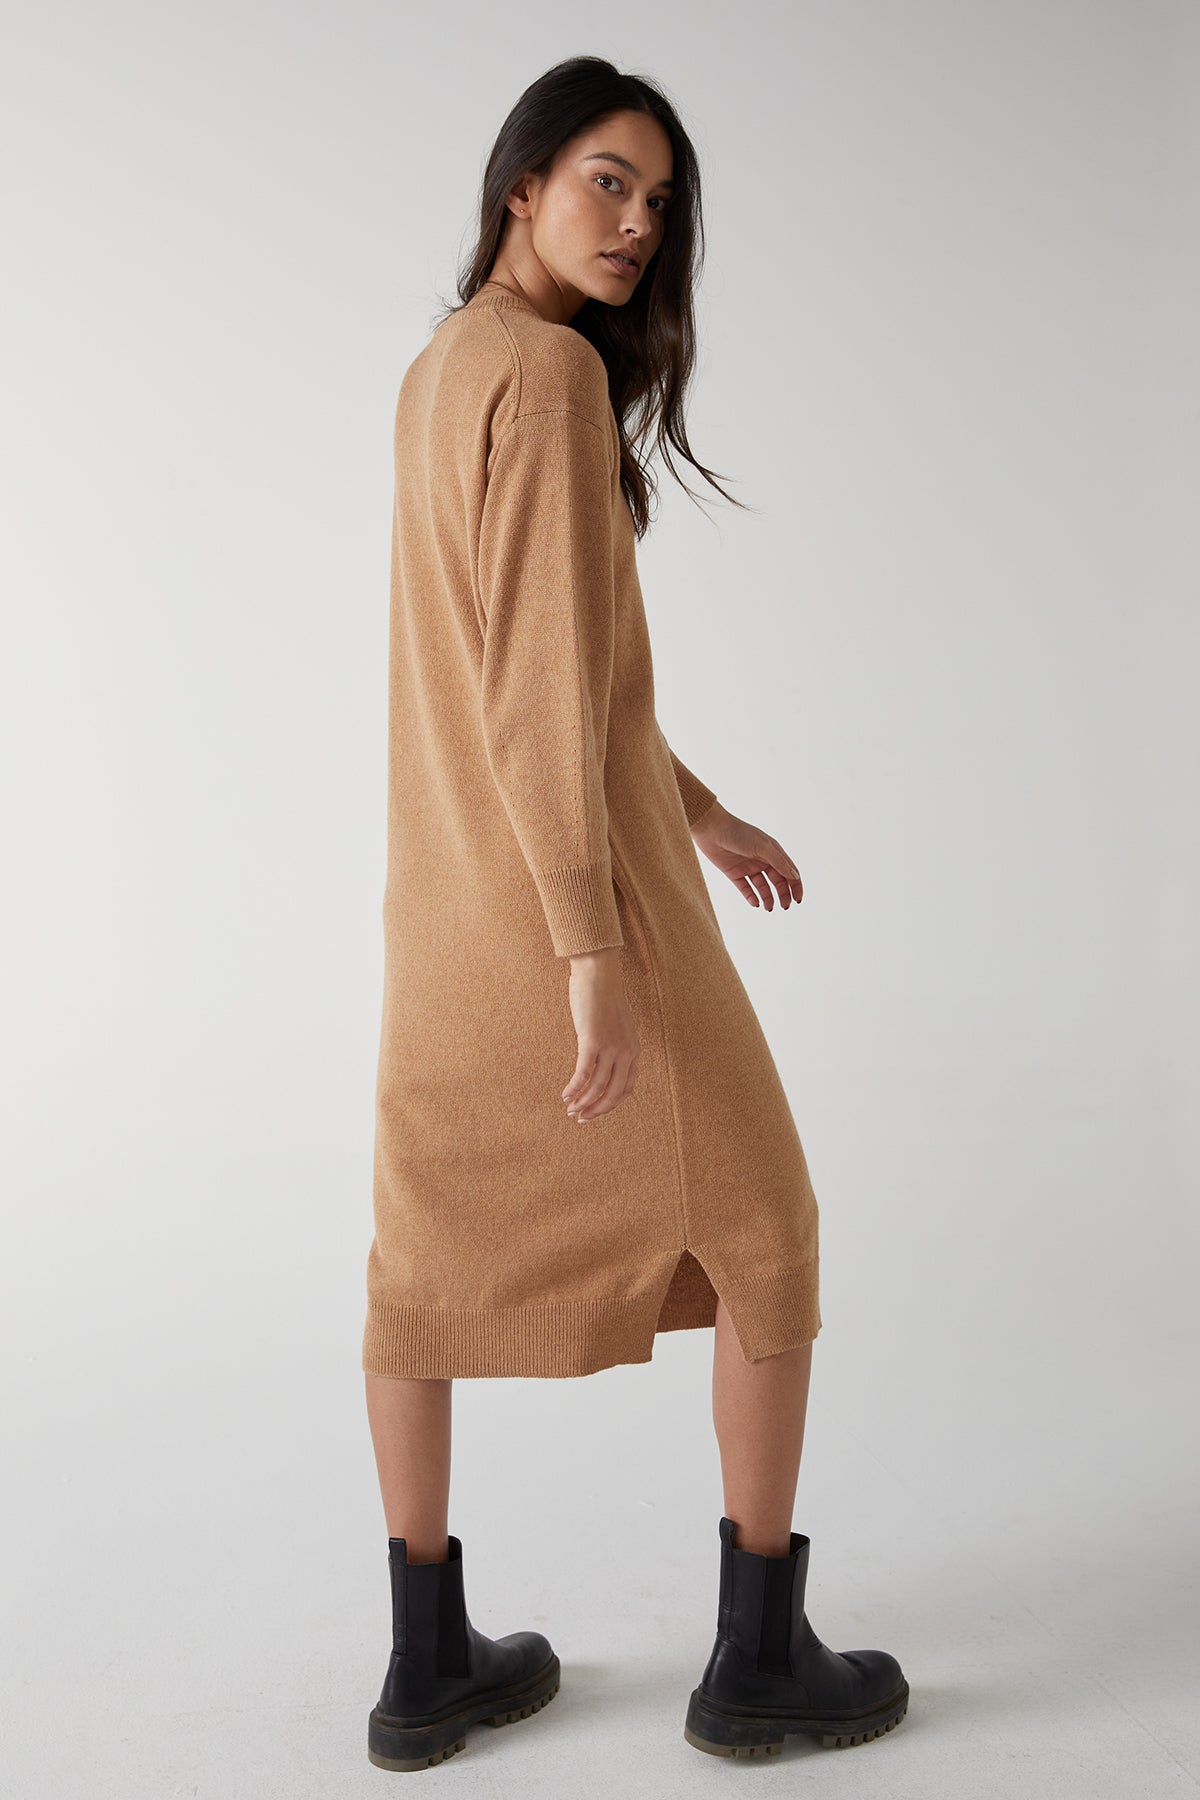 The model is wearing a LAUREL DRESS by Velvet by Jenny Graham, a modern sweater dress with side hem slits, in a camel hue.-25315843834049